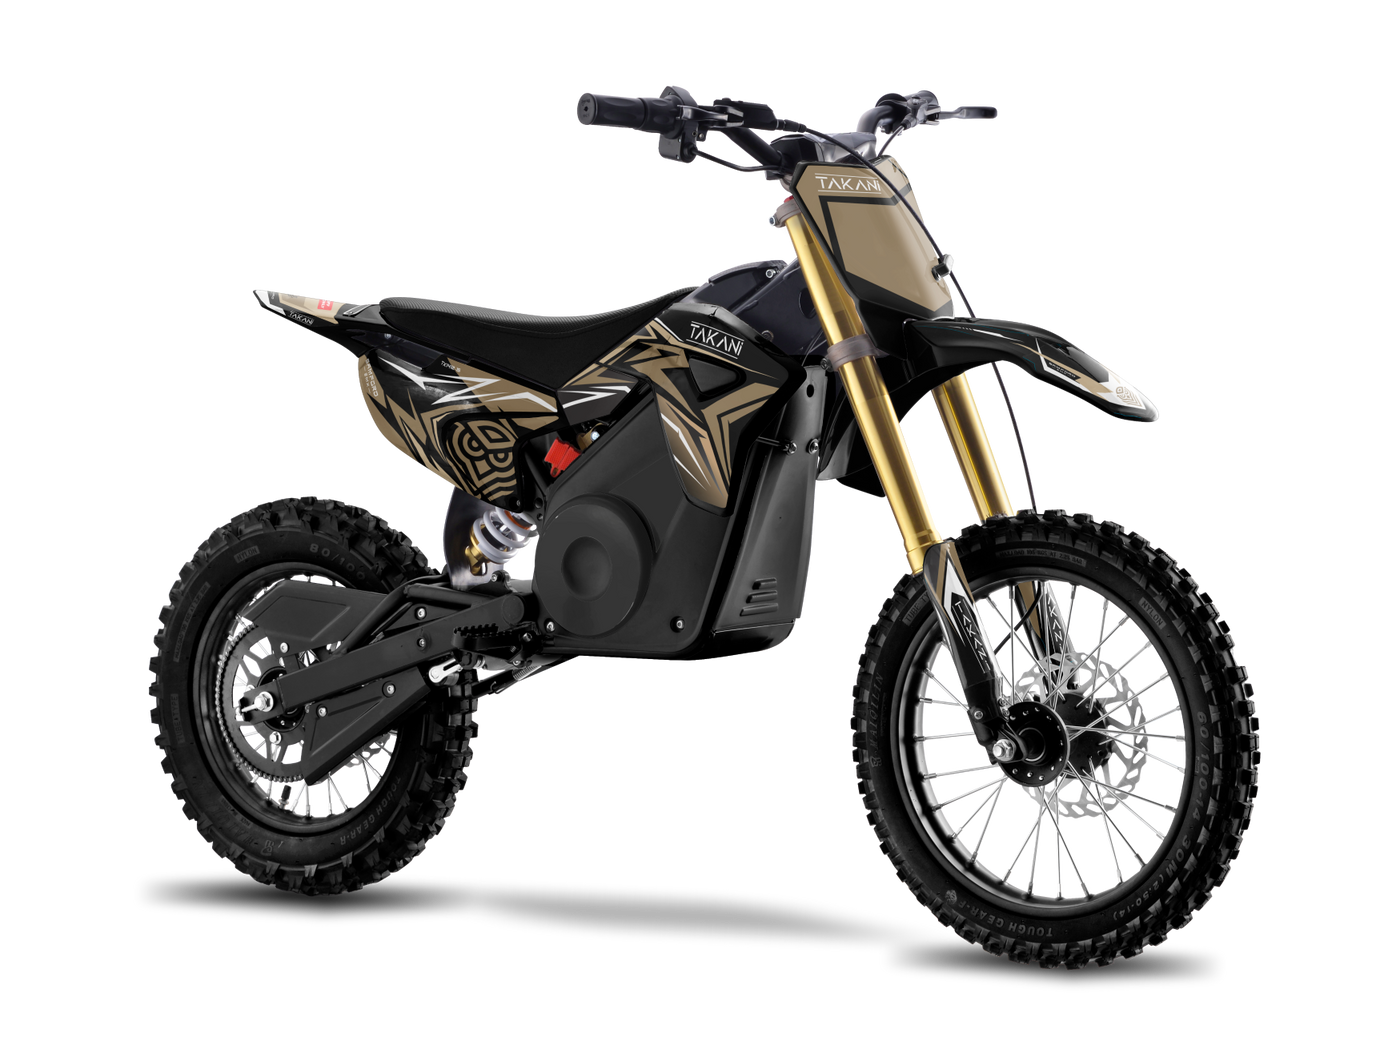 TAKANI 1300W electric motocross bike for kids, this MIDI electric dirt bike is the perfect beginner bike for motocross beginners.